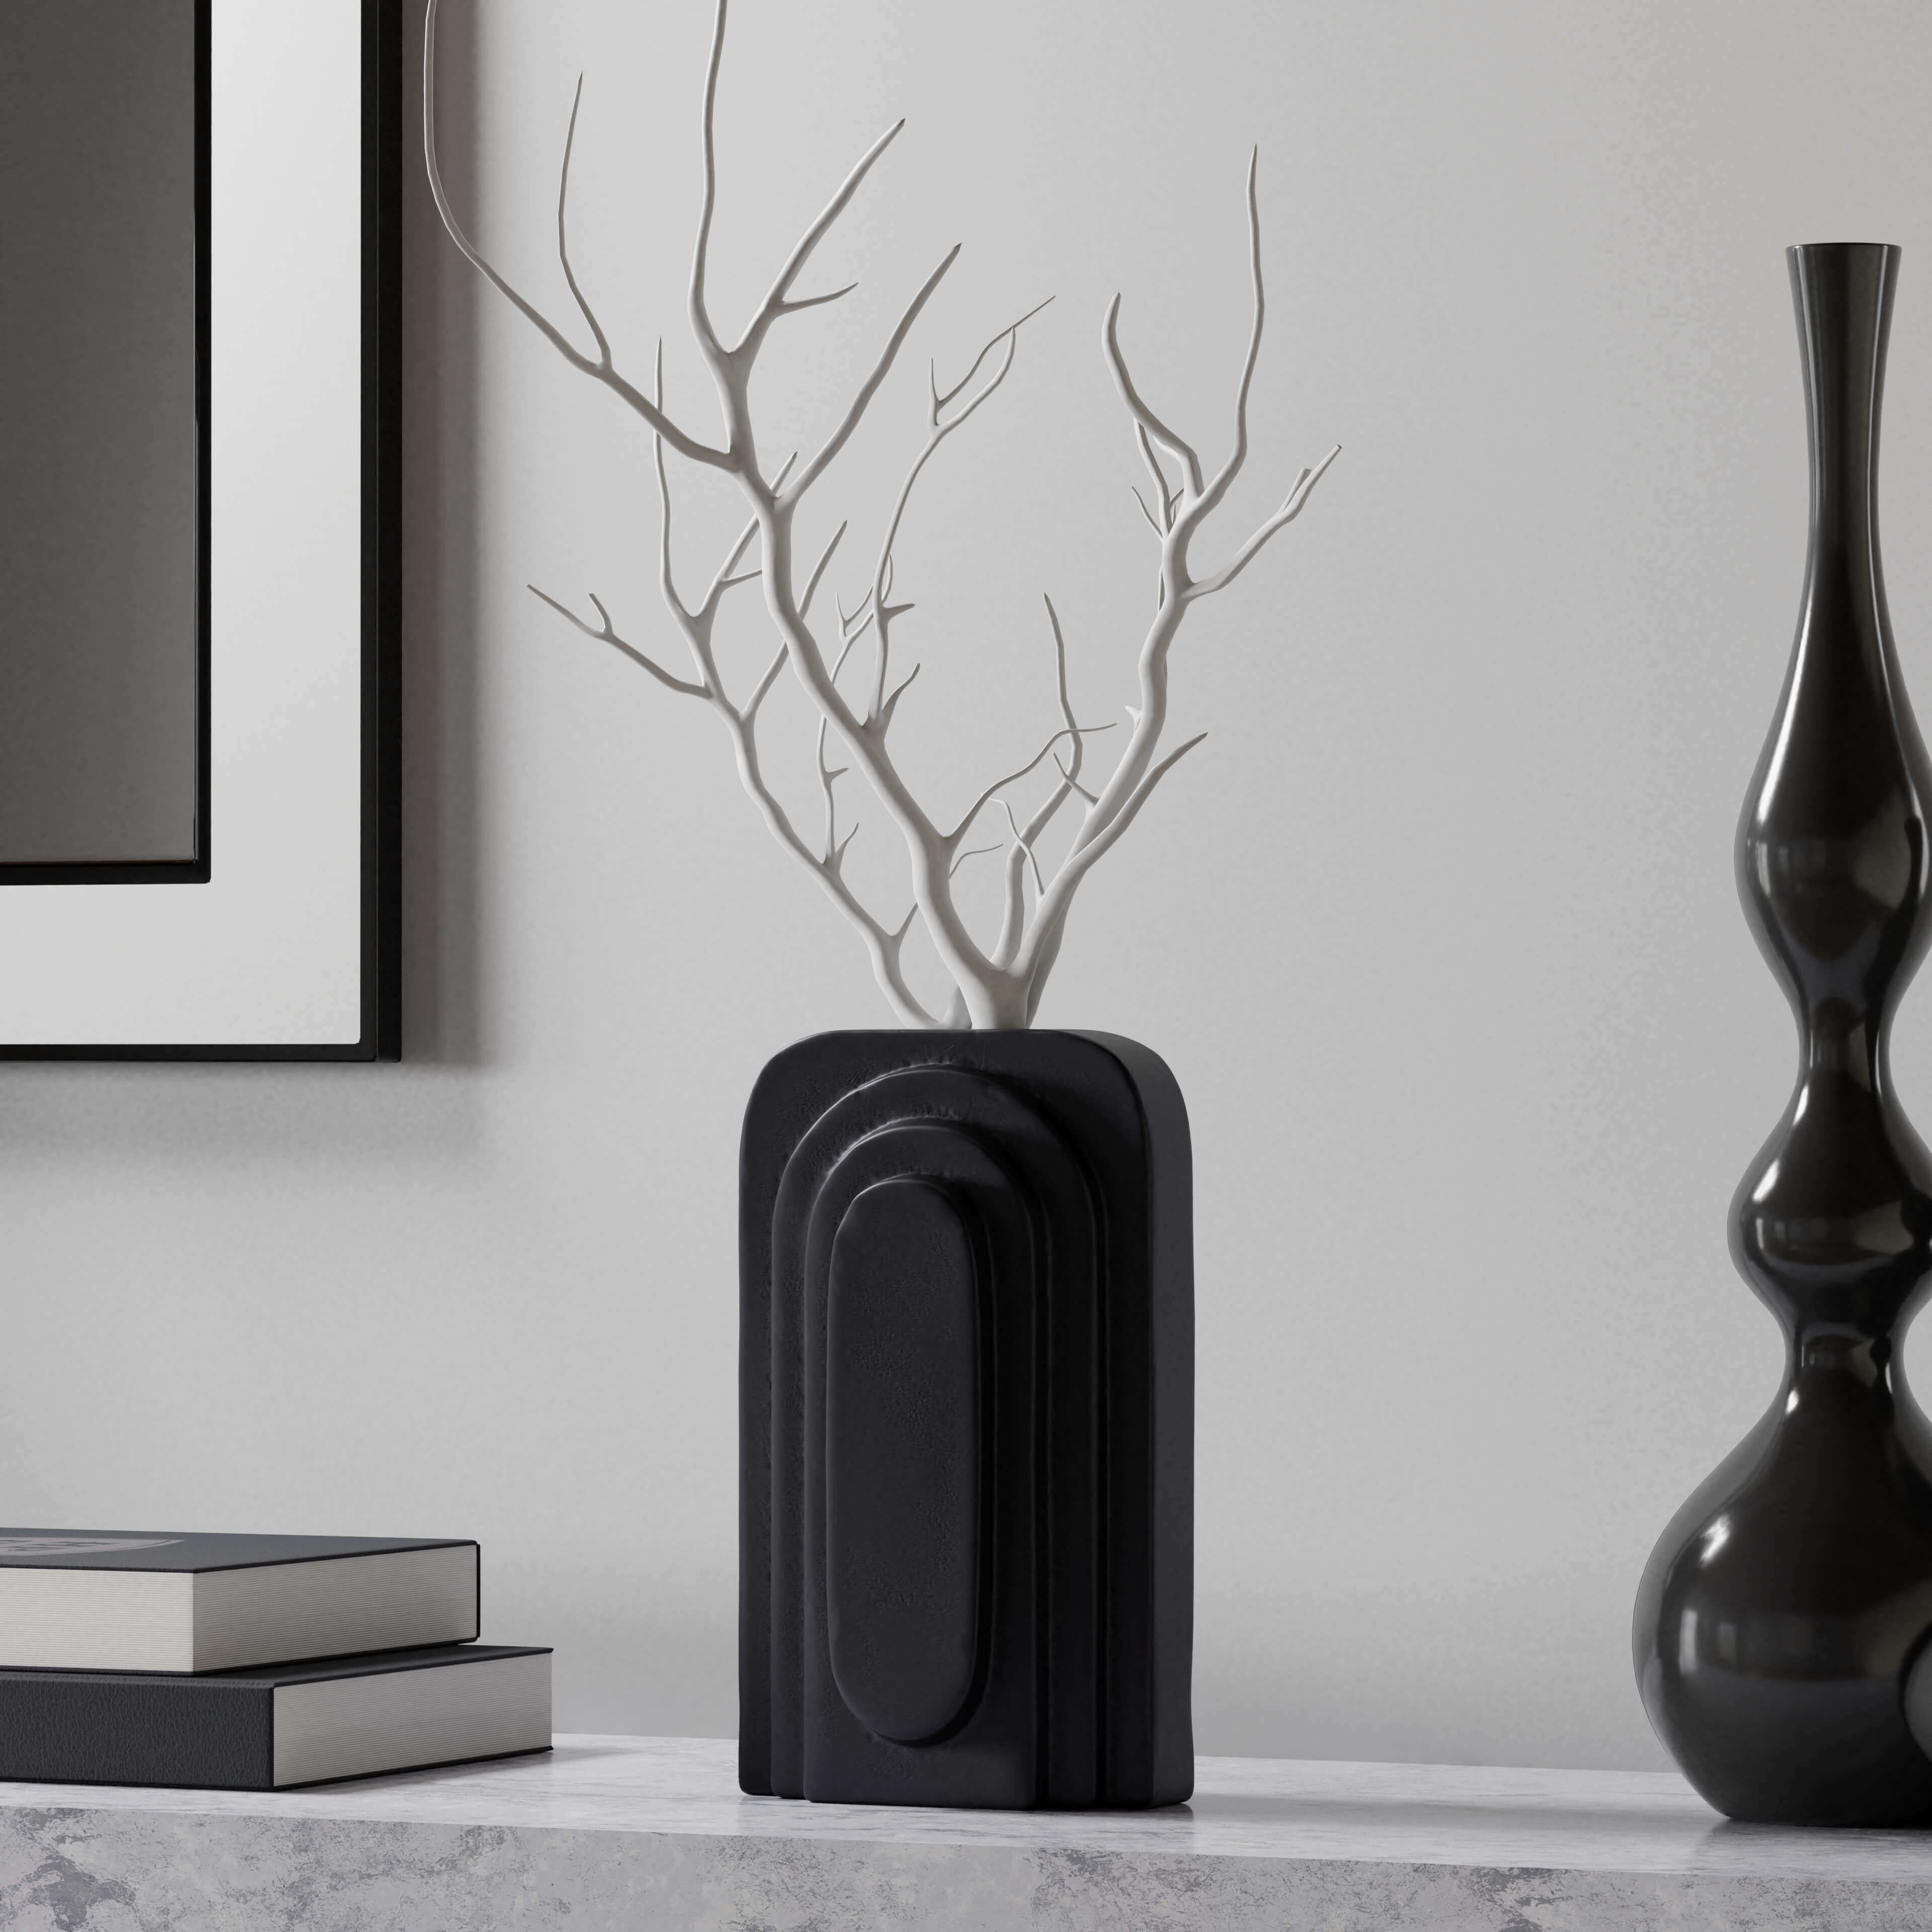 3D generated black modern vases made in imagine.io